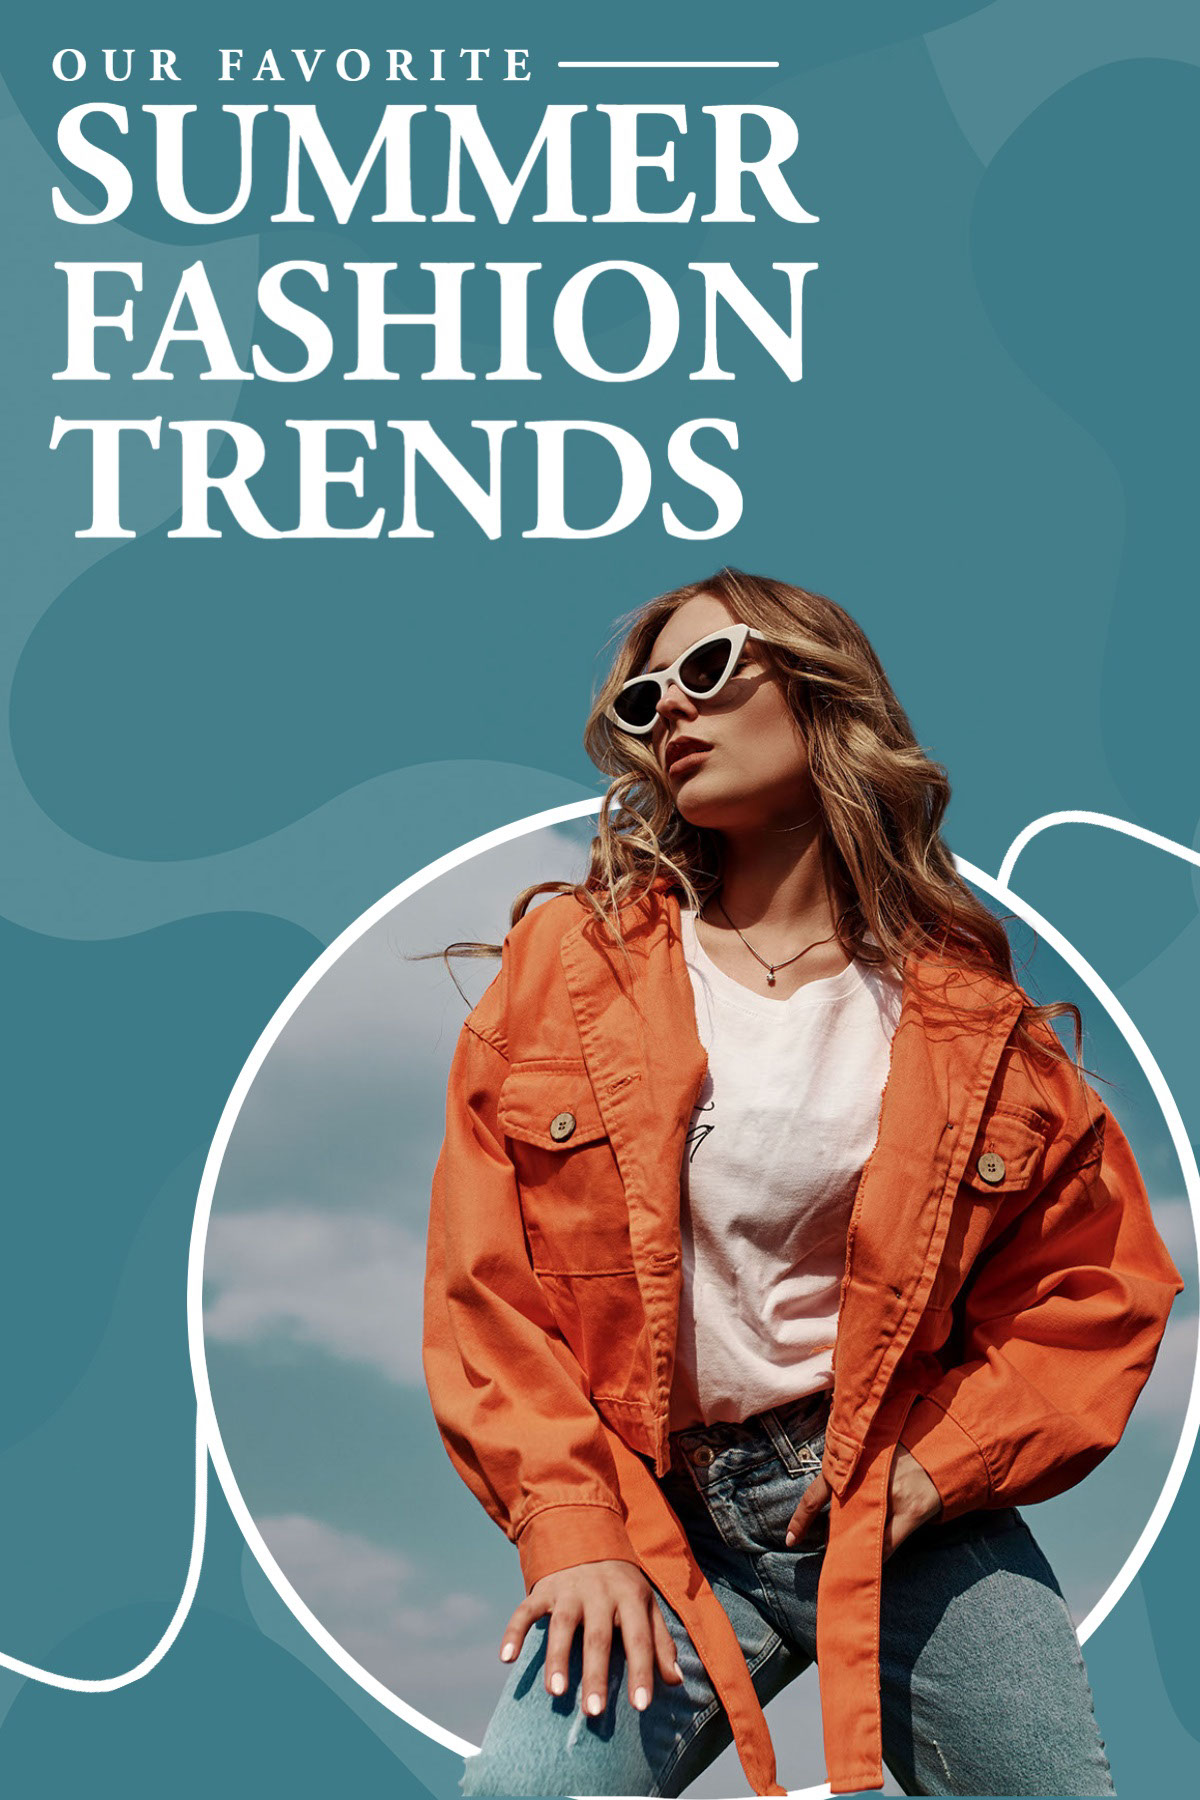 Blue Summer Fashion Trends Pinterest SUMMER FASHION TRENDS OUR FAVORITE